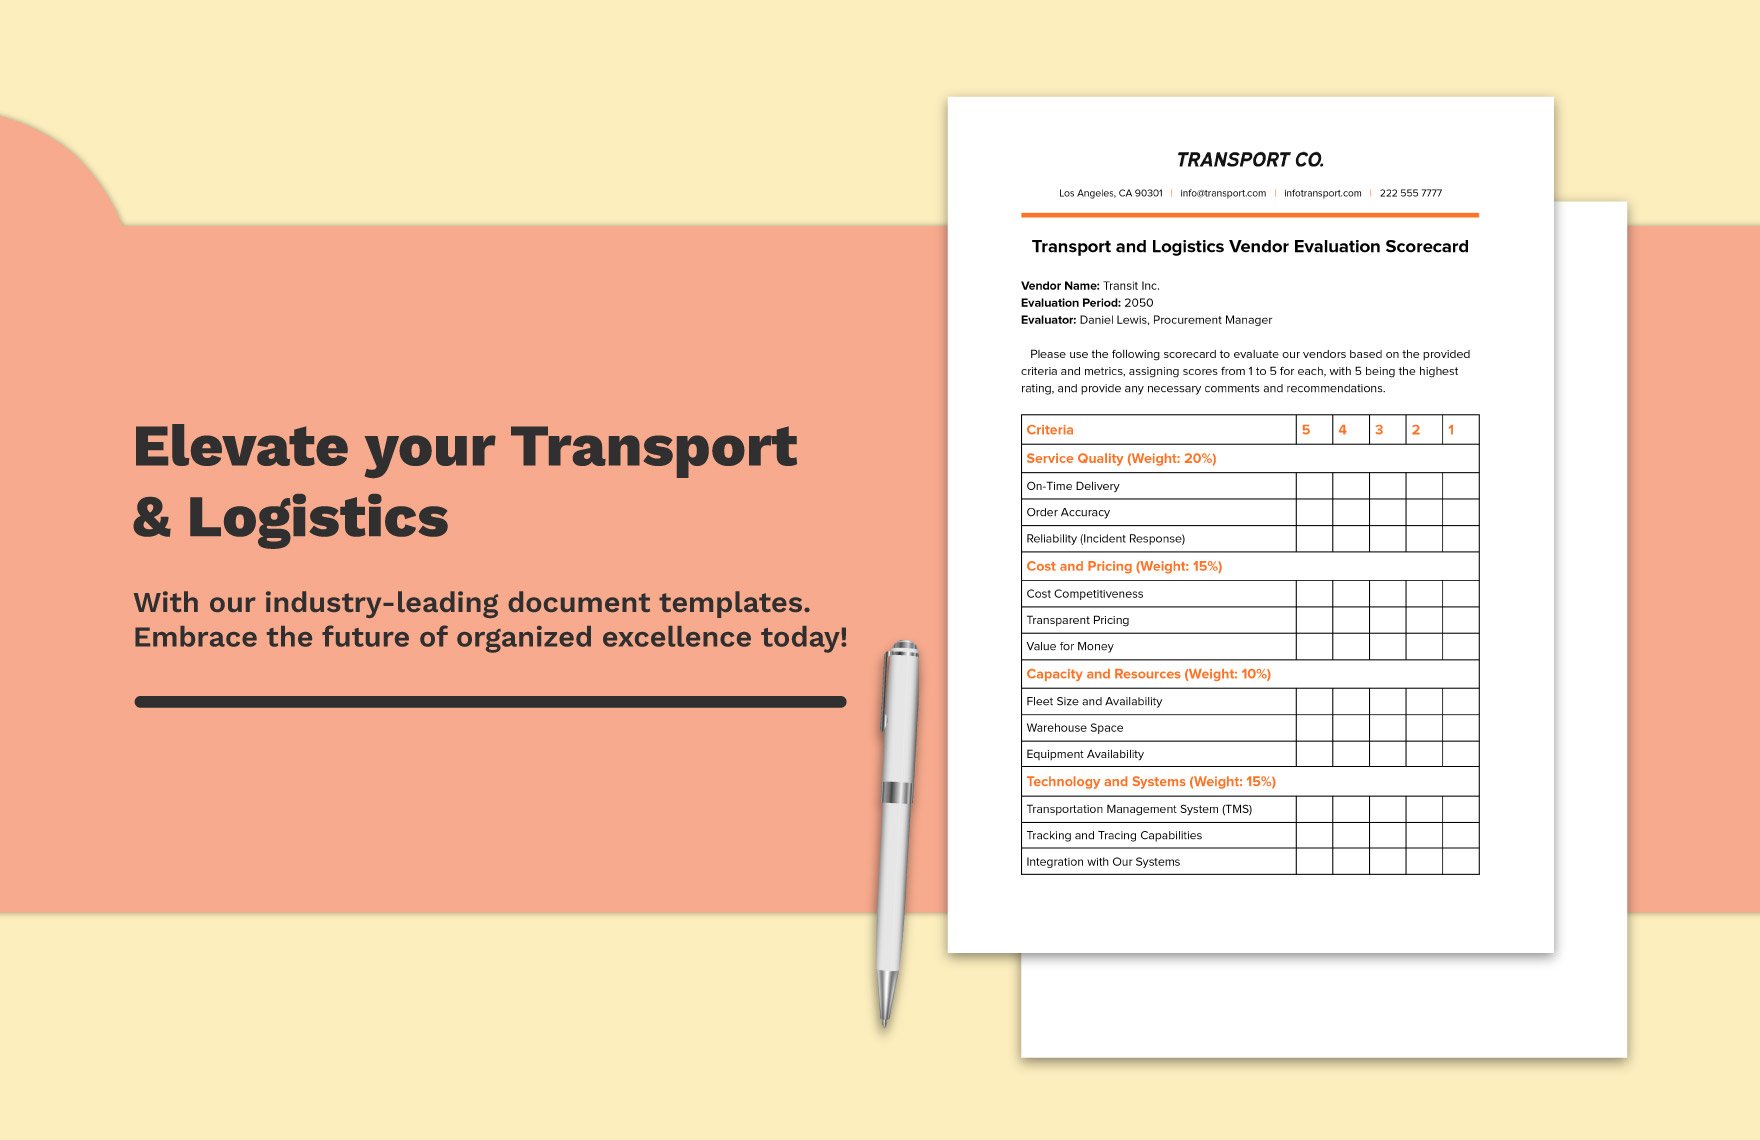 Transport and Logistics Vendor Evaluation Scorecard Template